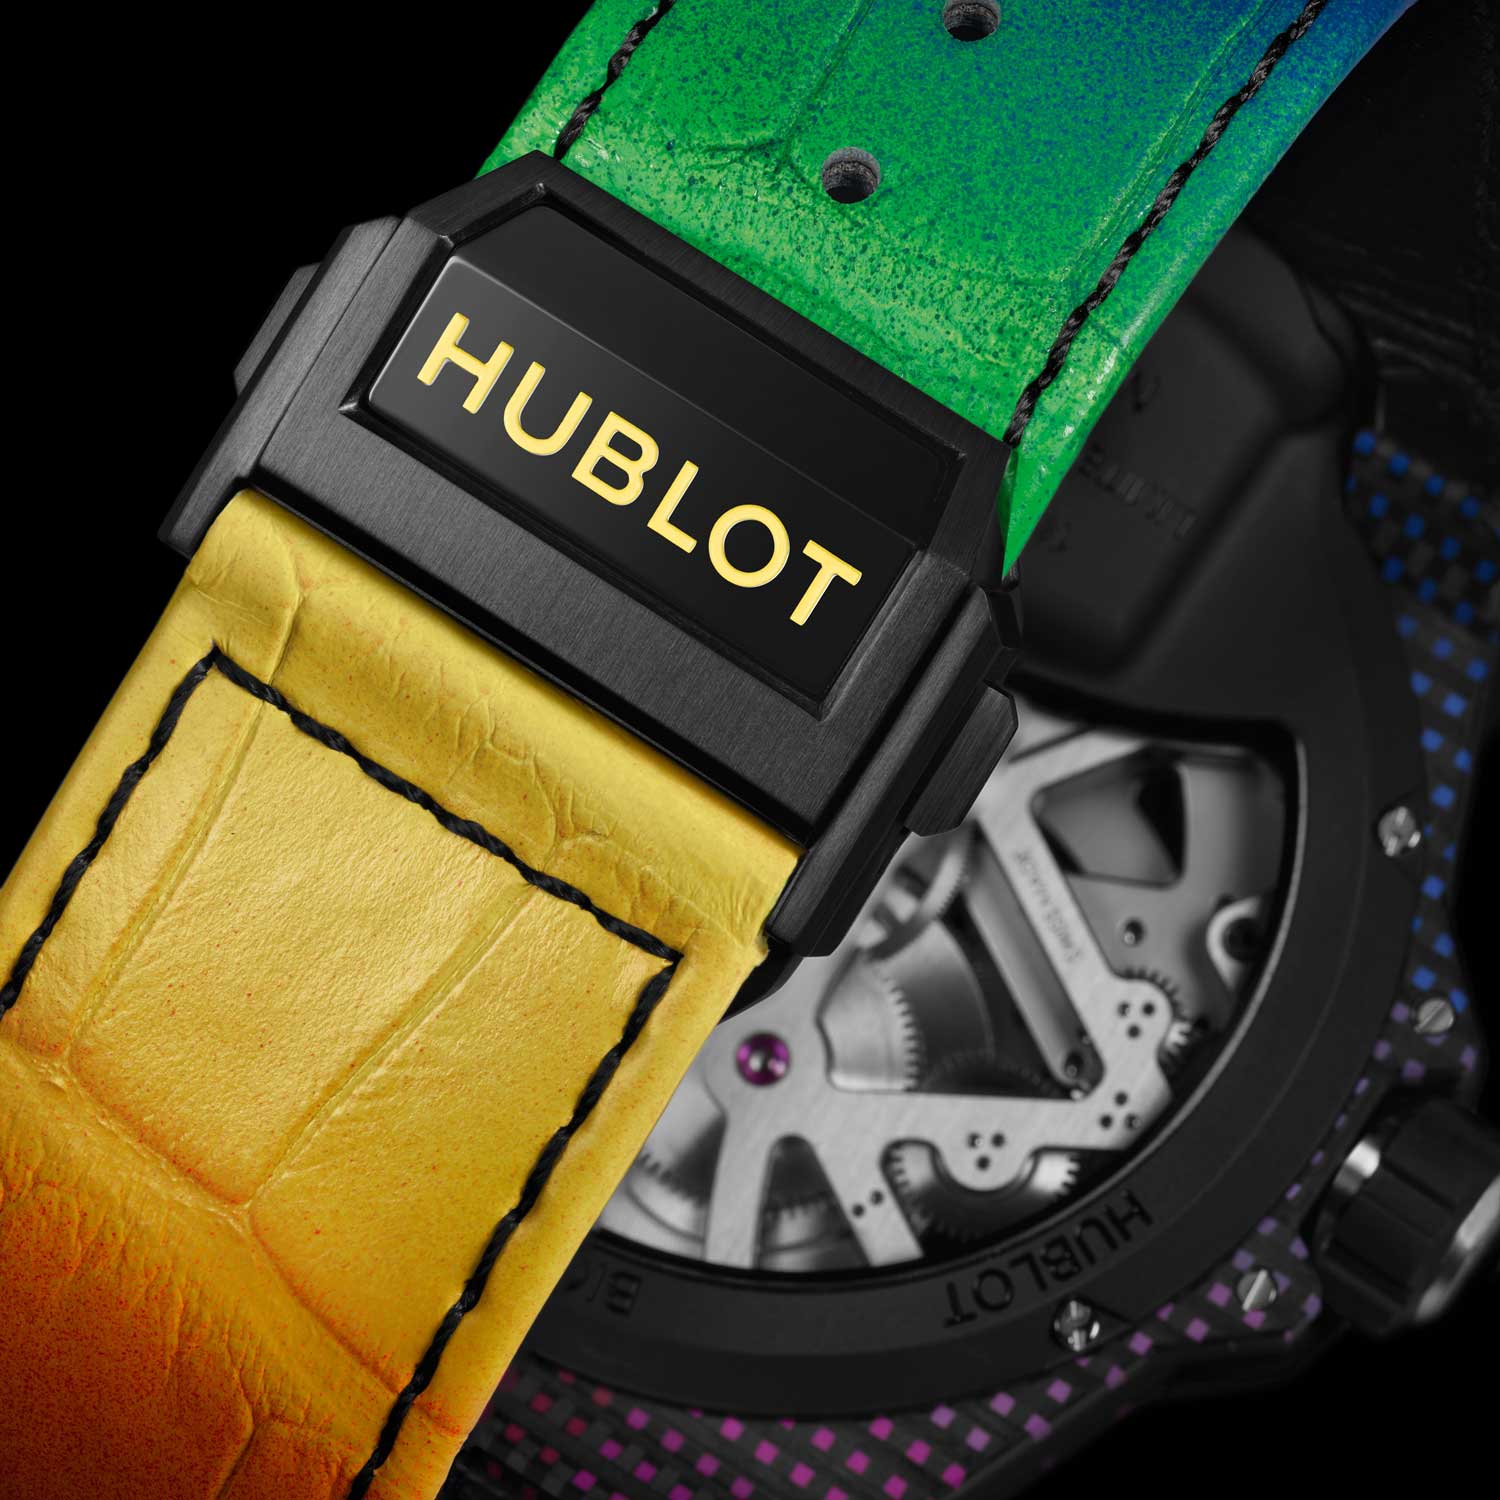 Hublot MP-09 Tourbillon Bi-Axis 5-Day Power Reserve in Rainbow 3D Carbon